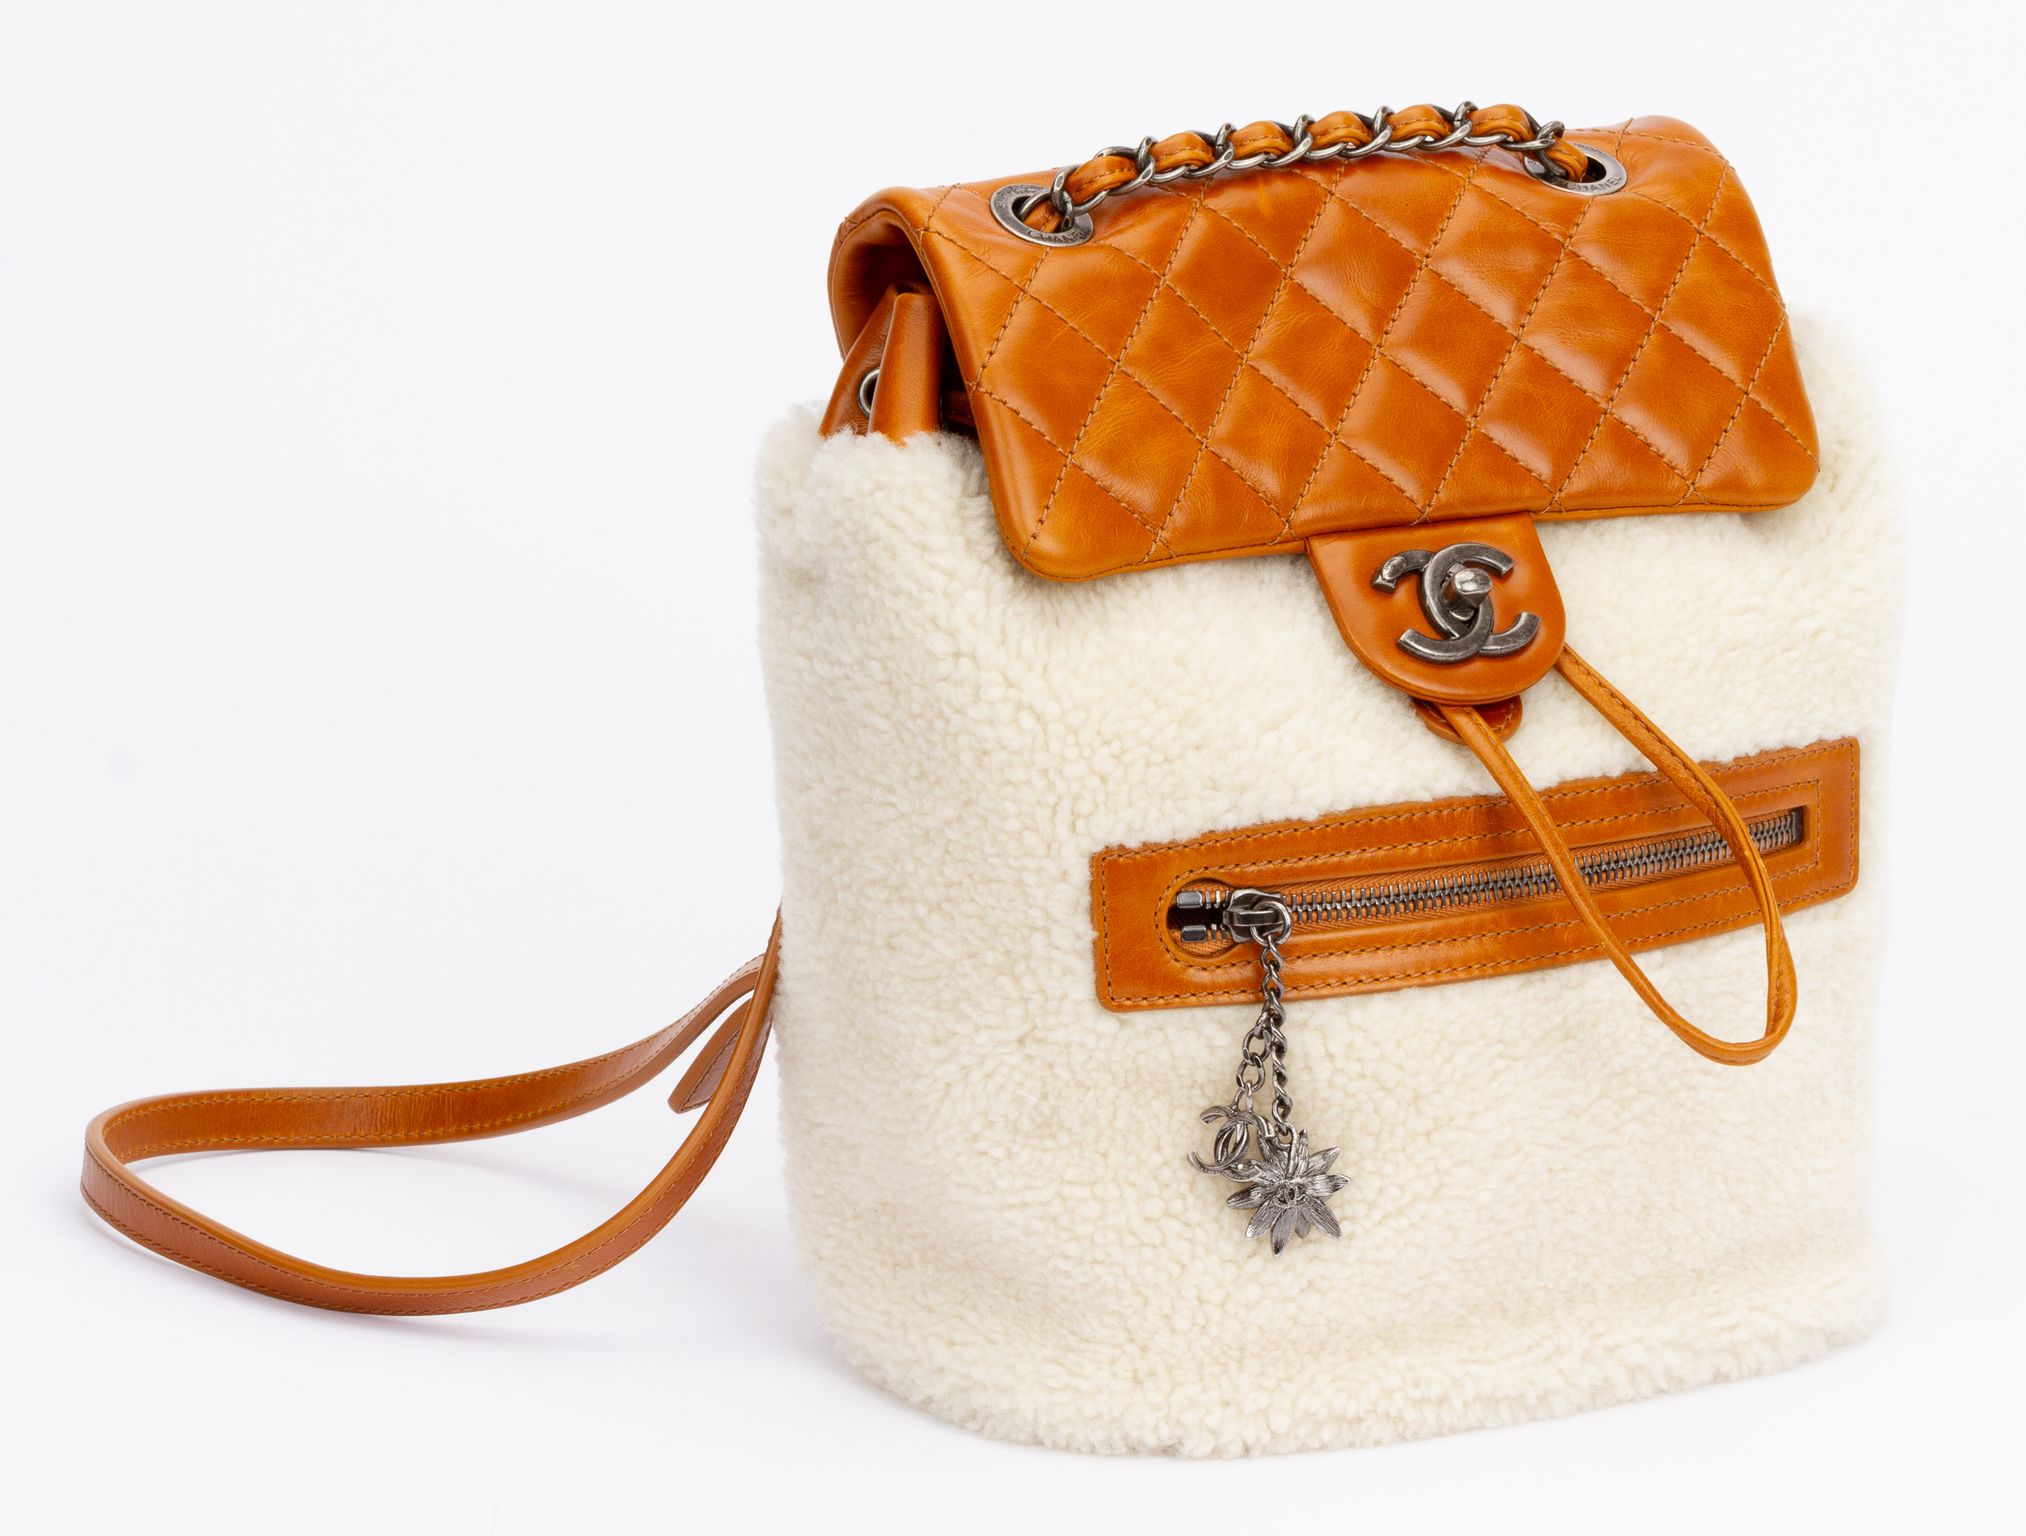 Chanel Brown Shearling CC Shoulder Bag 18cas721